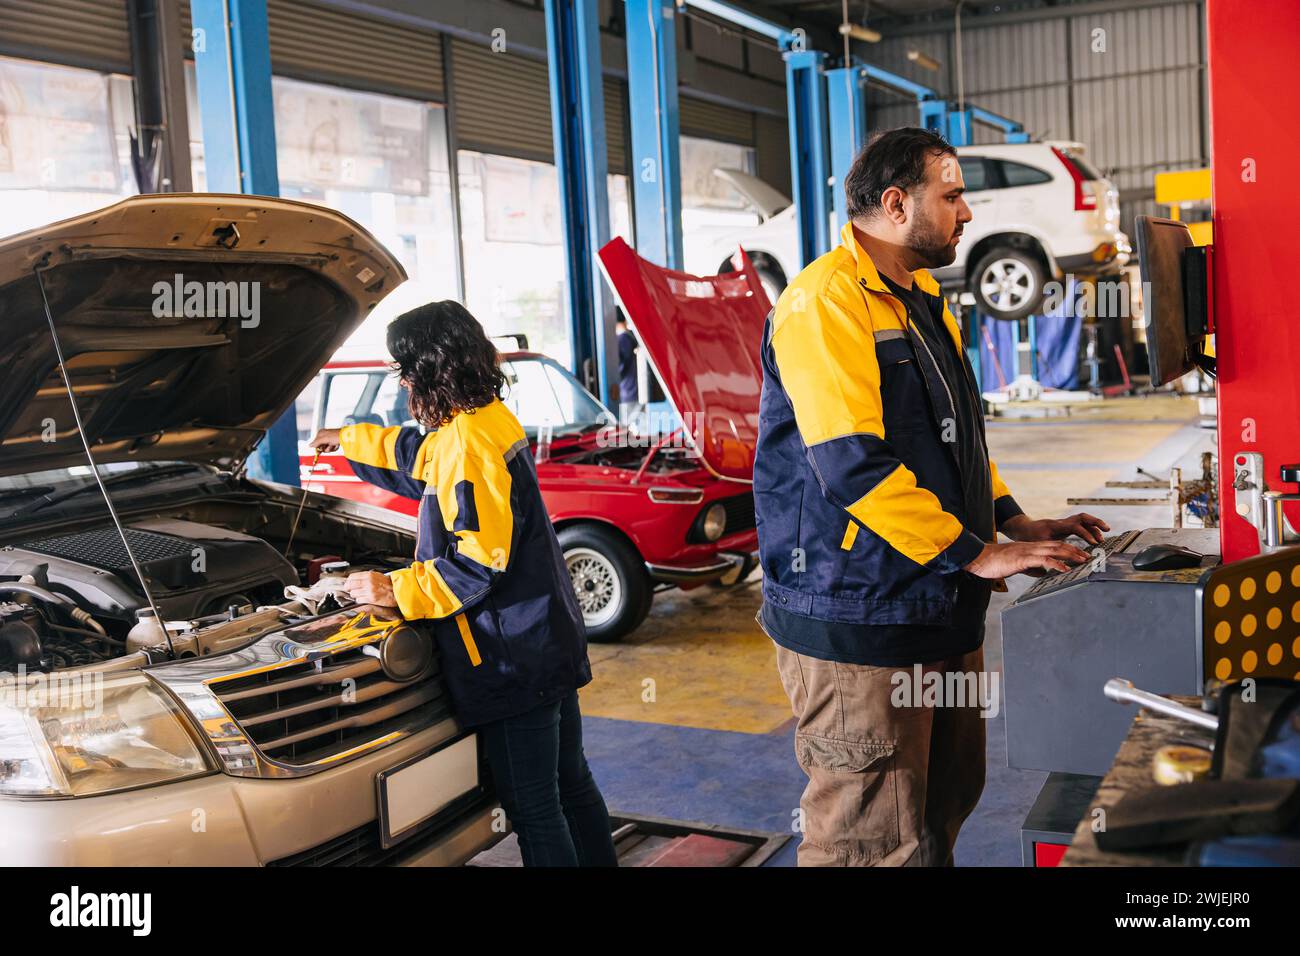 Garage auto mechanic worker working check engine oil level stick in car service center employee teamwork Stock Photo